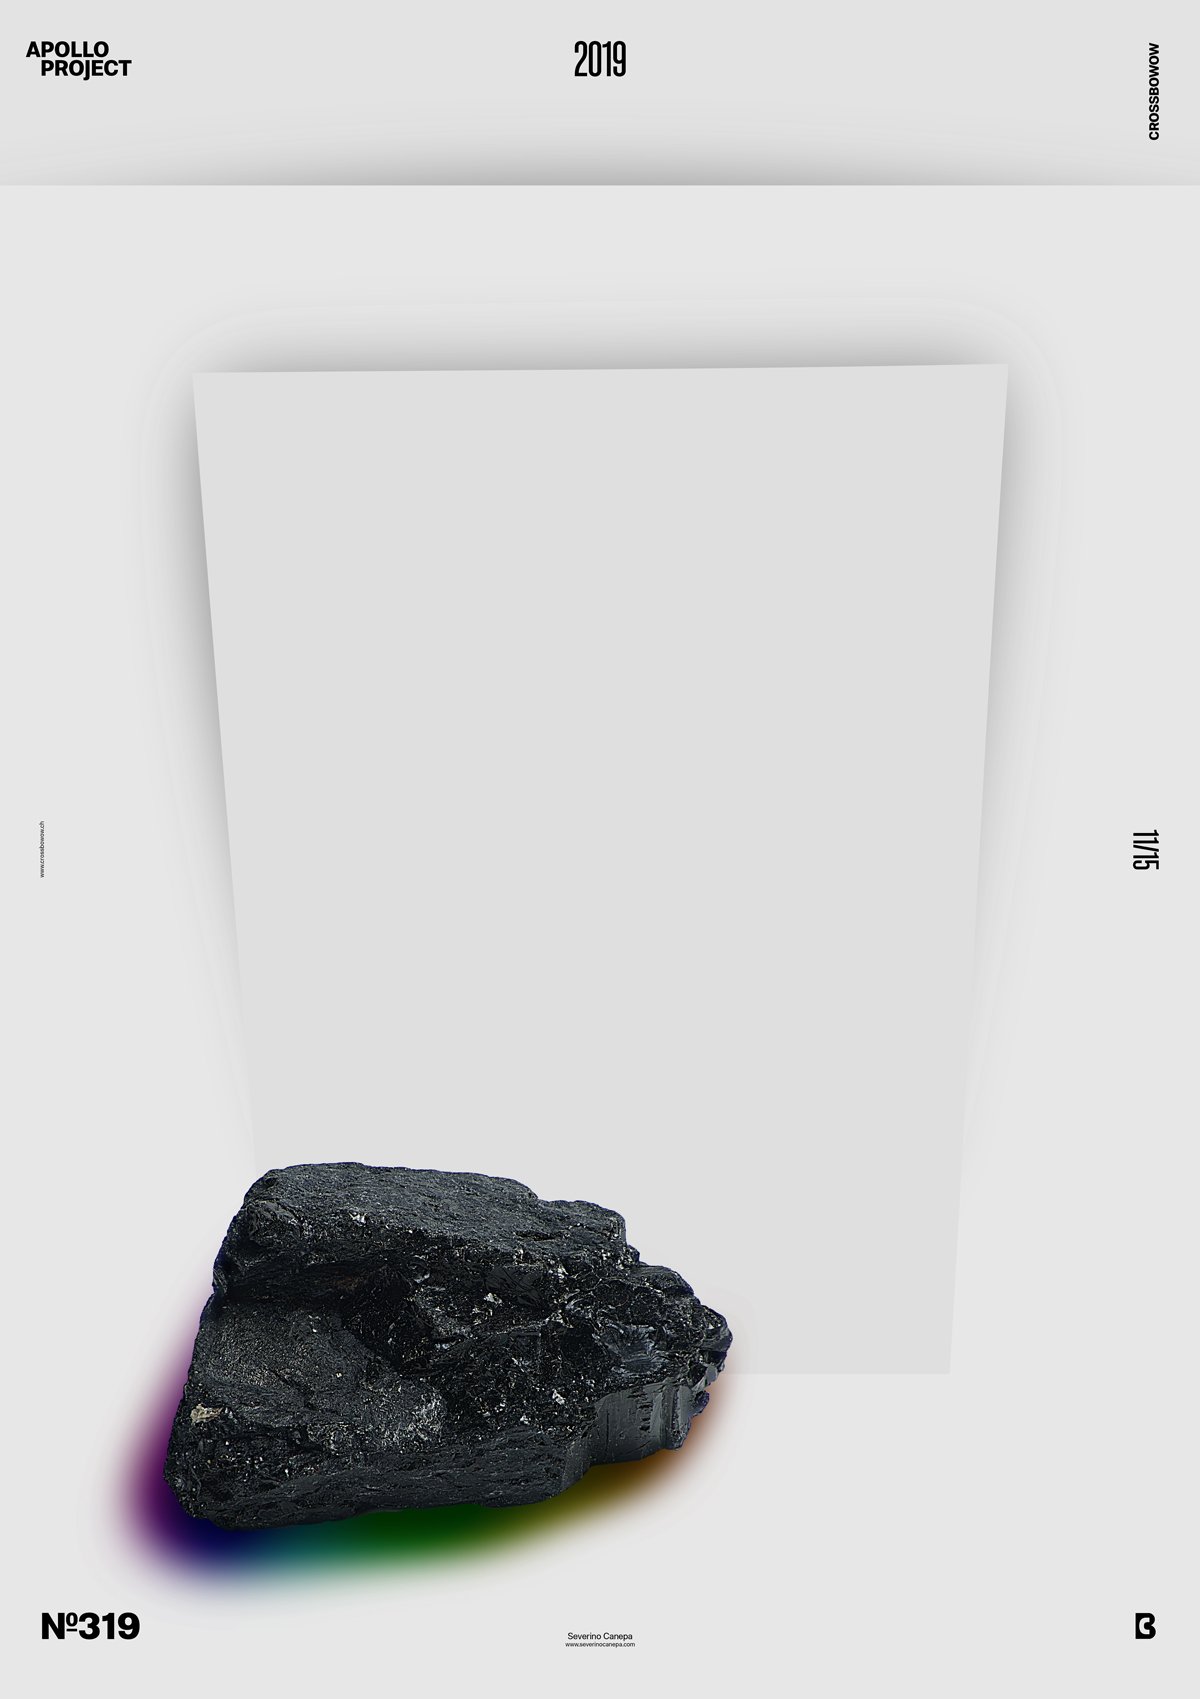 The poster design Lunar Rock and its minimalist design